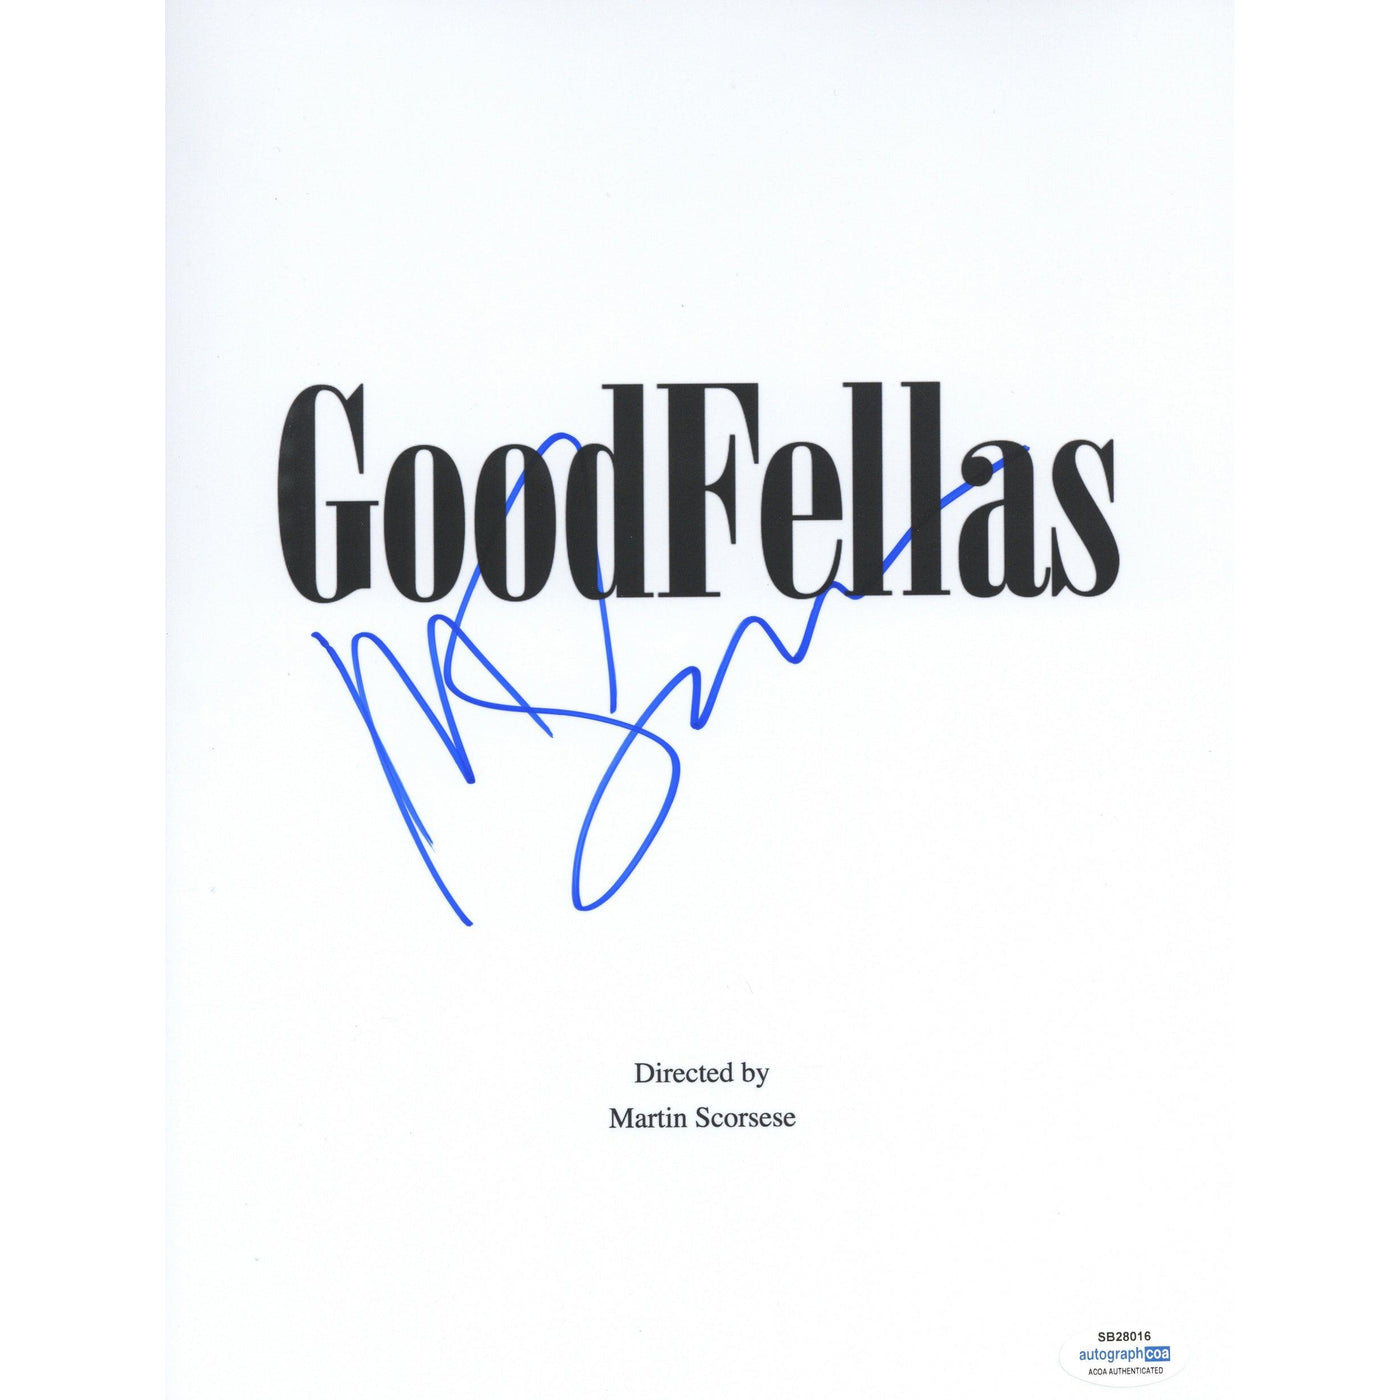 Martin Scorsese Signed Movie Script Cover Goodfellas Autographed ACOA